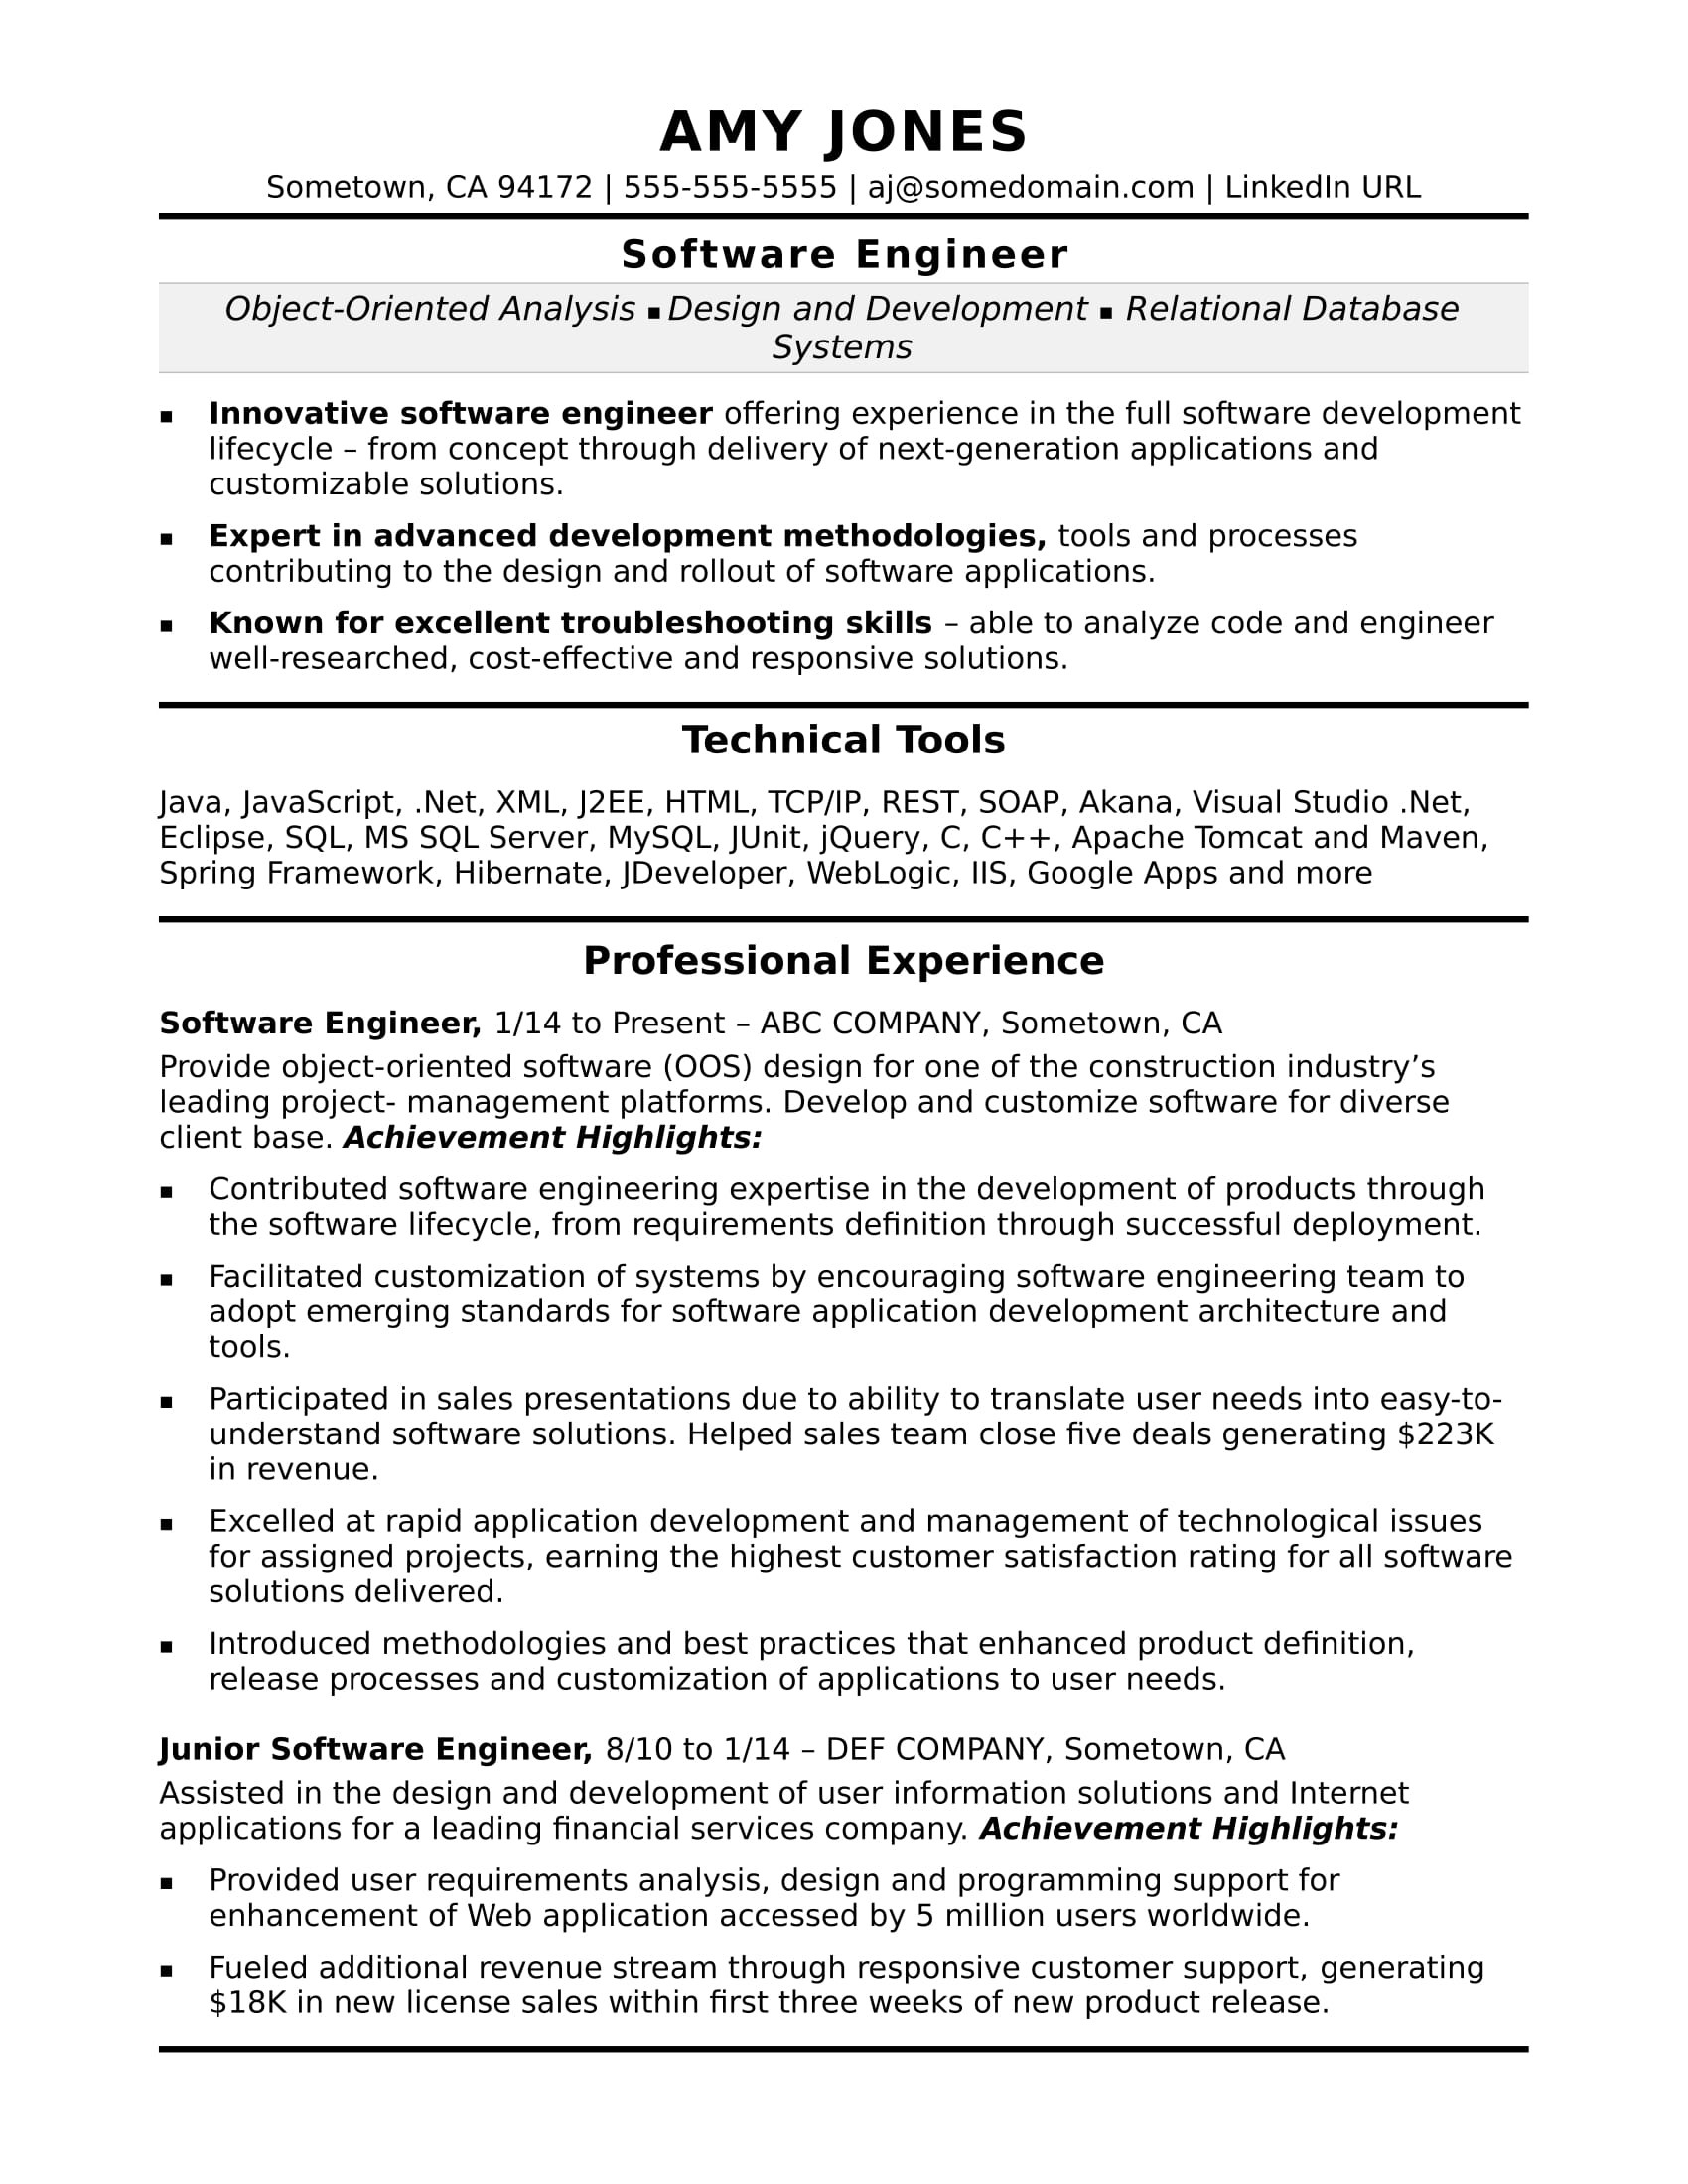 Resume Samples for Experienced software Developer Midlevel software Engineer Resume Sample Monster.com